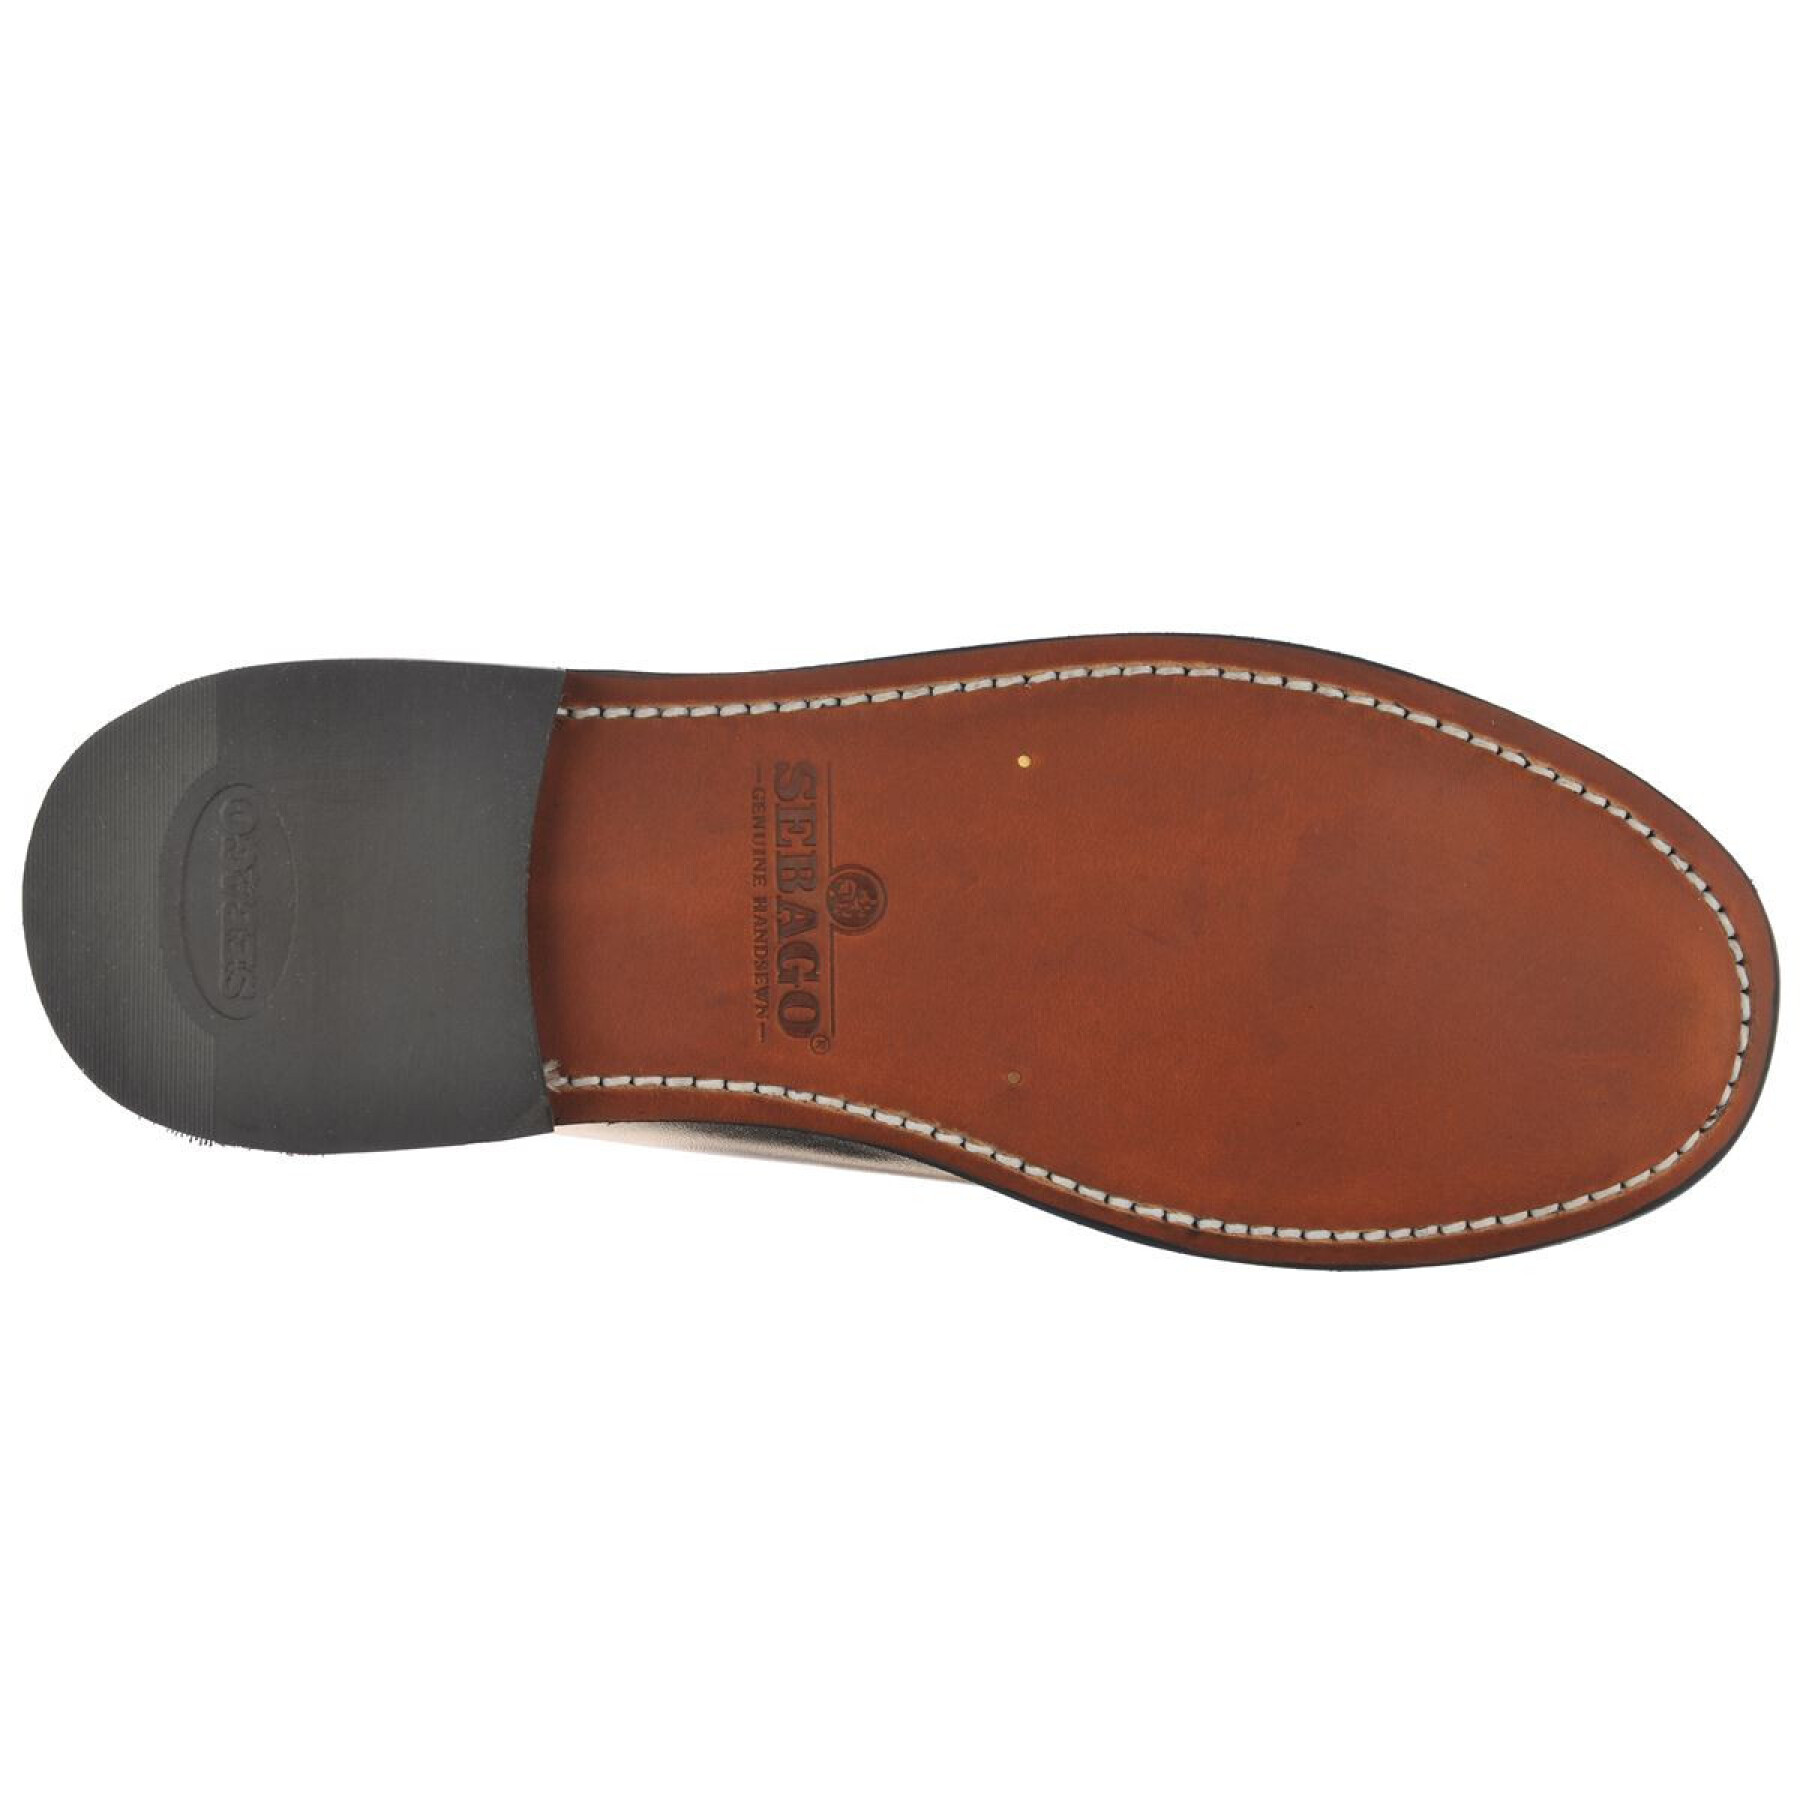 Women's leather loafers Sebago Dan Met